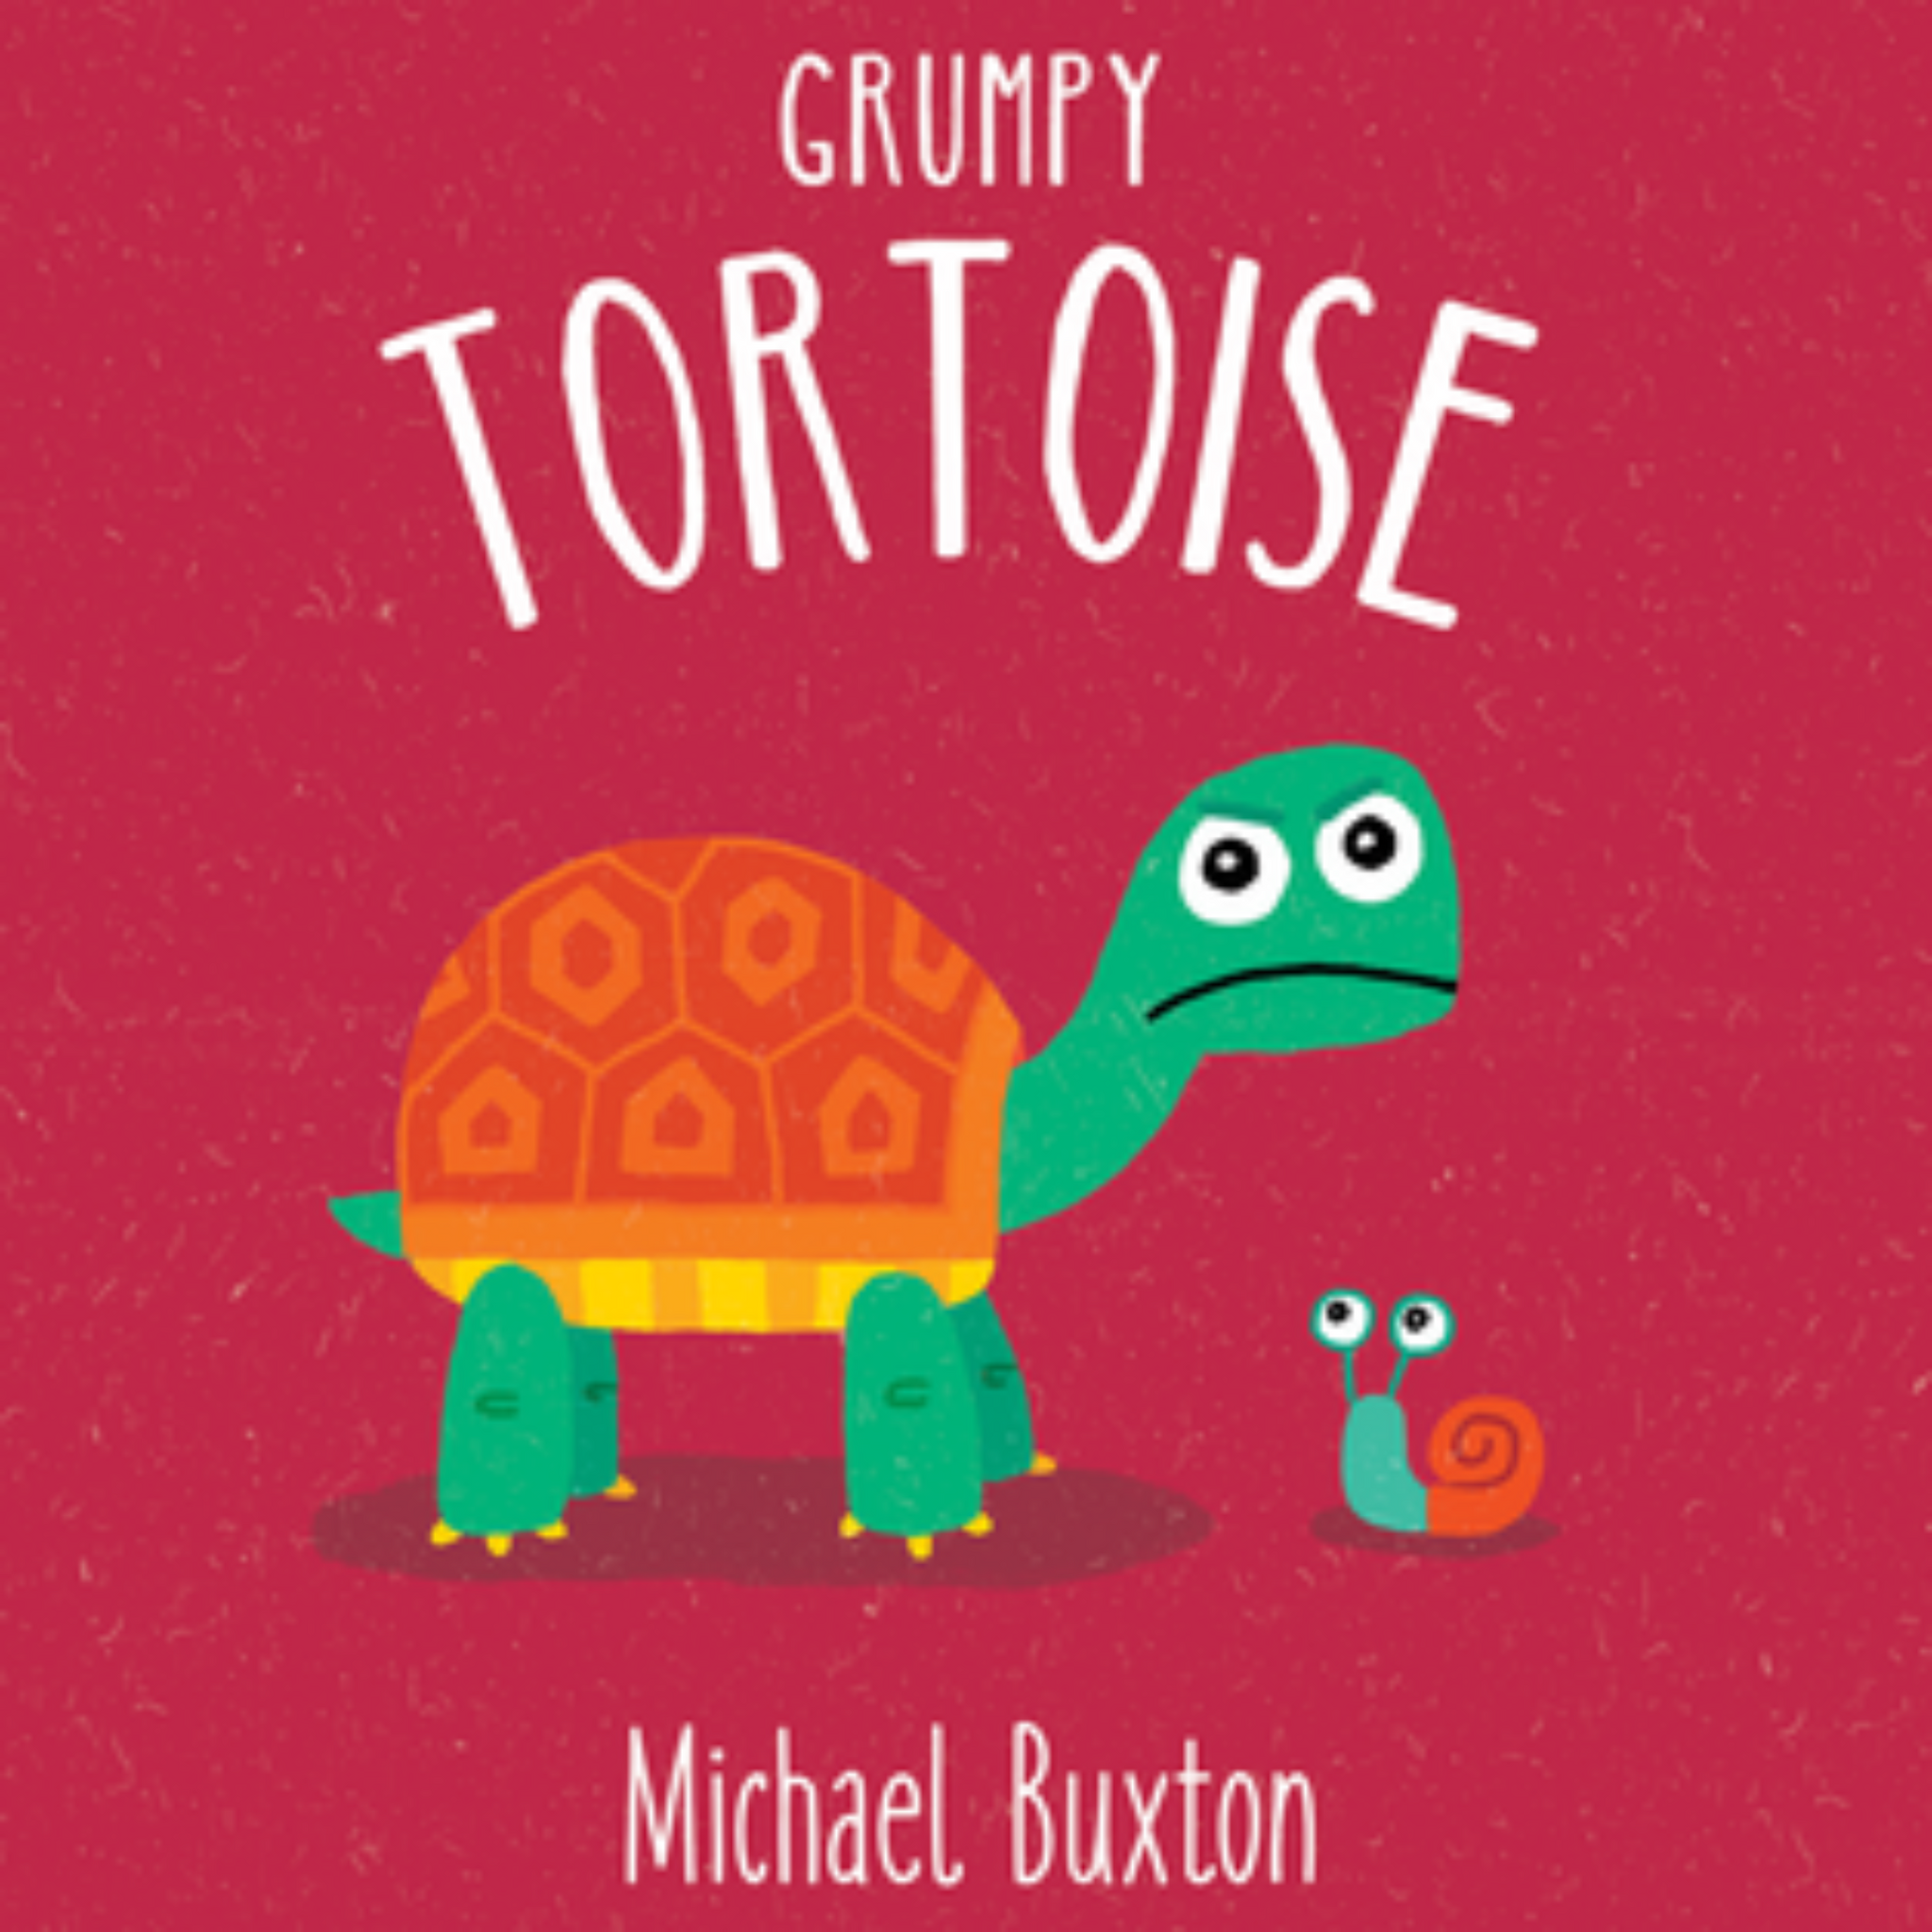 Usborne Books "Grumpy Tortoise" book by Michael Buxton